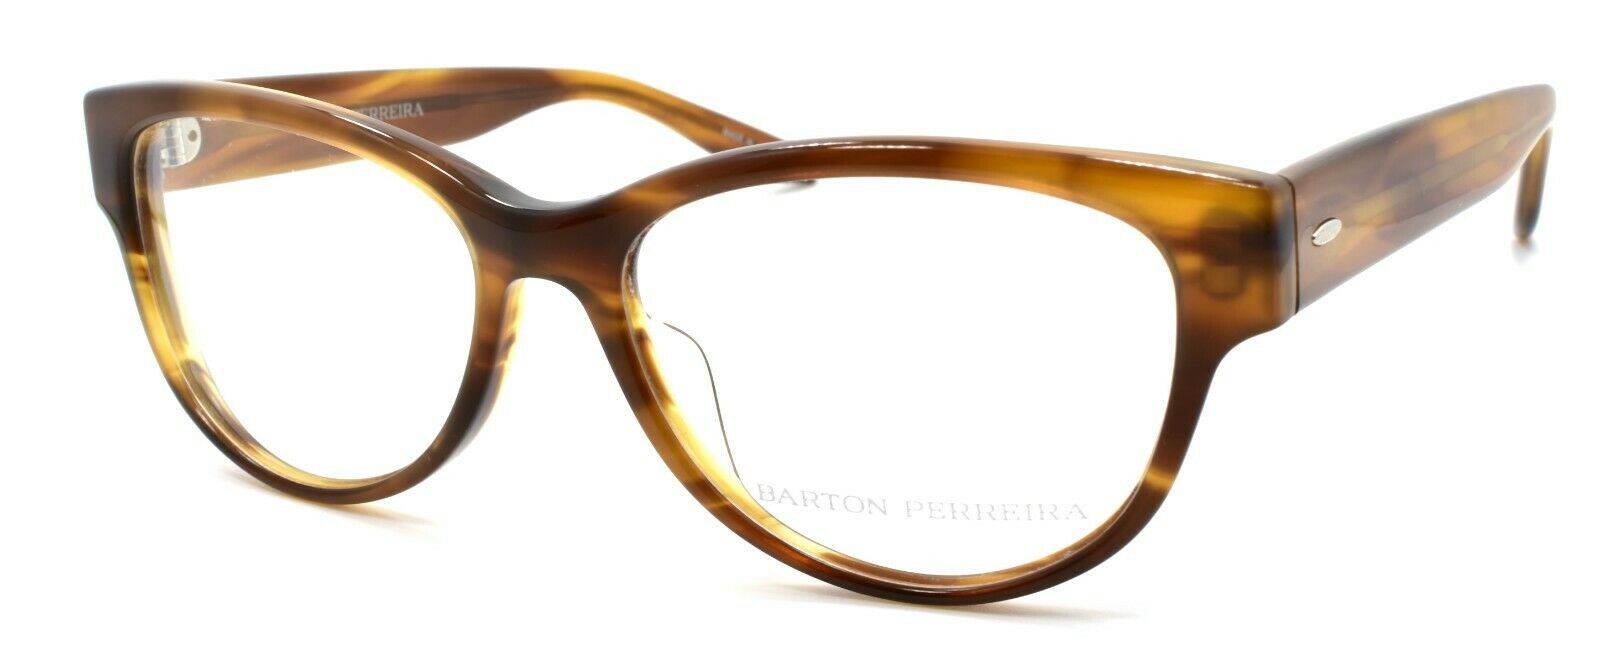 1-Barton Perreira Brooke UMT Women's Eyeglasses Asian Fit 53-16-140 Umber Tortoise-672263037699-IKSpecs